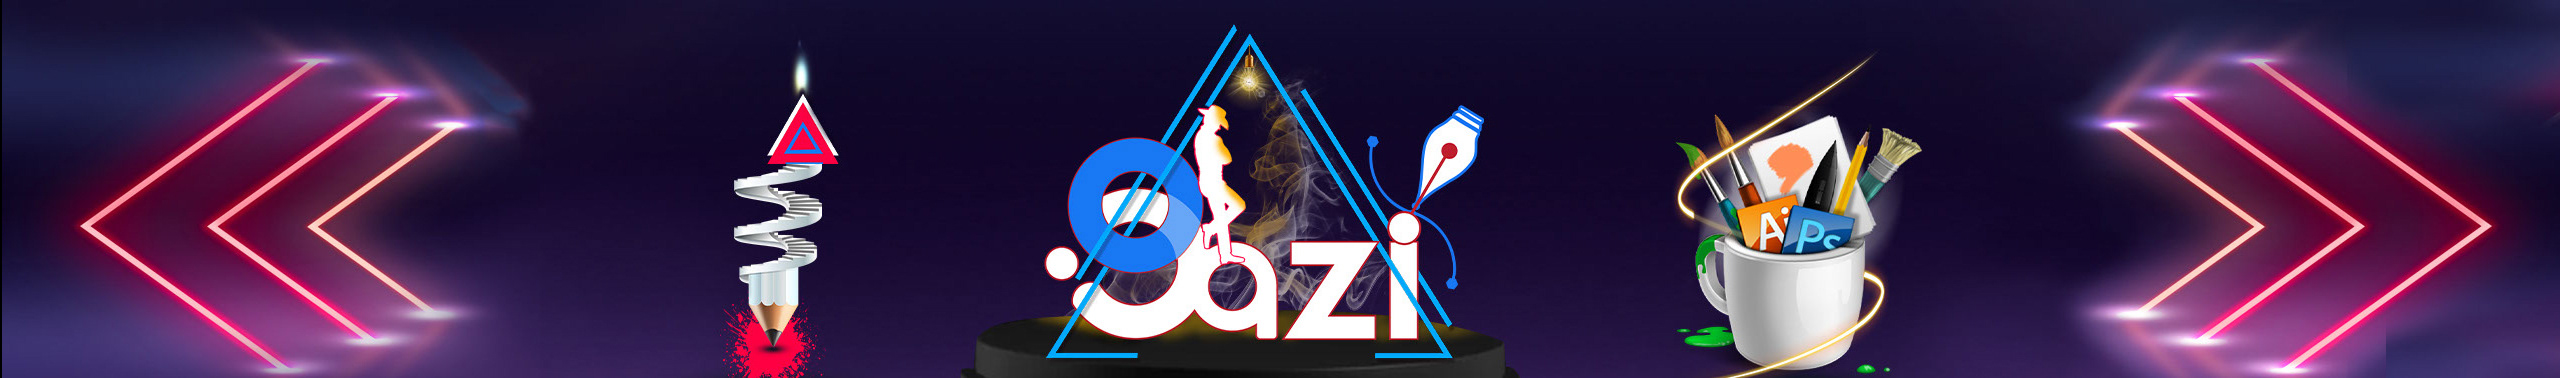 G.M. Iklaz Gazi's profile banner